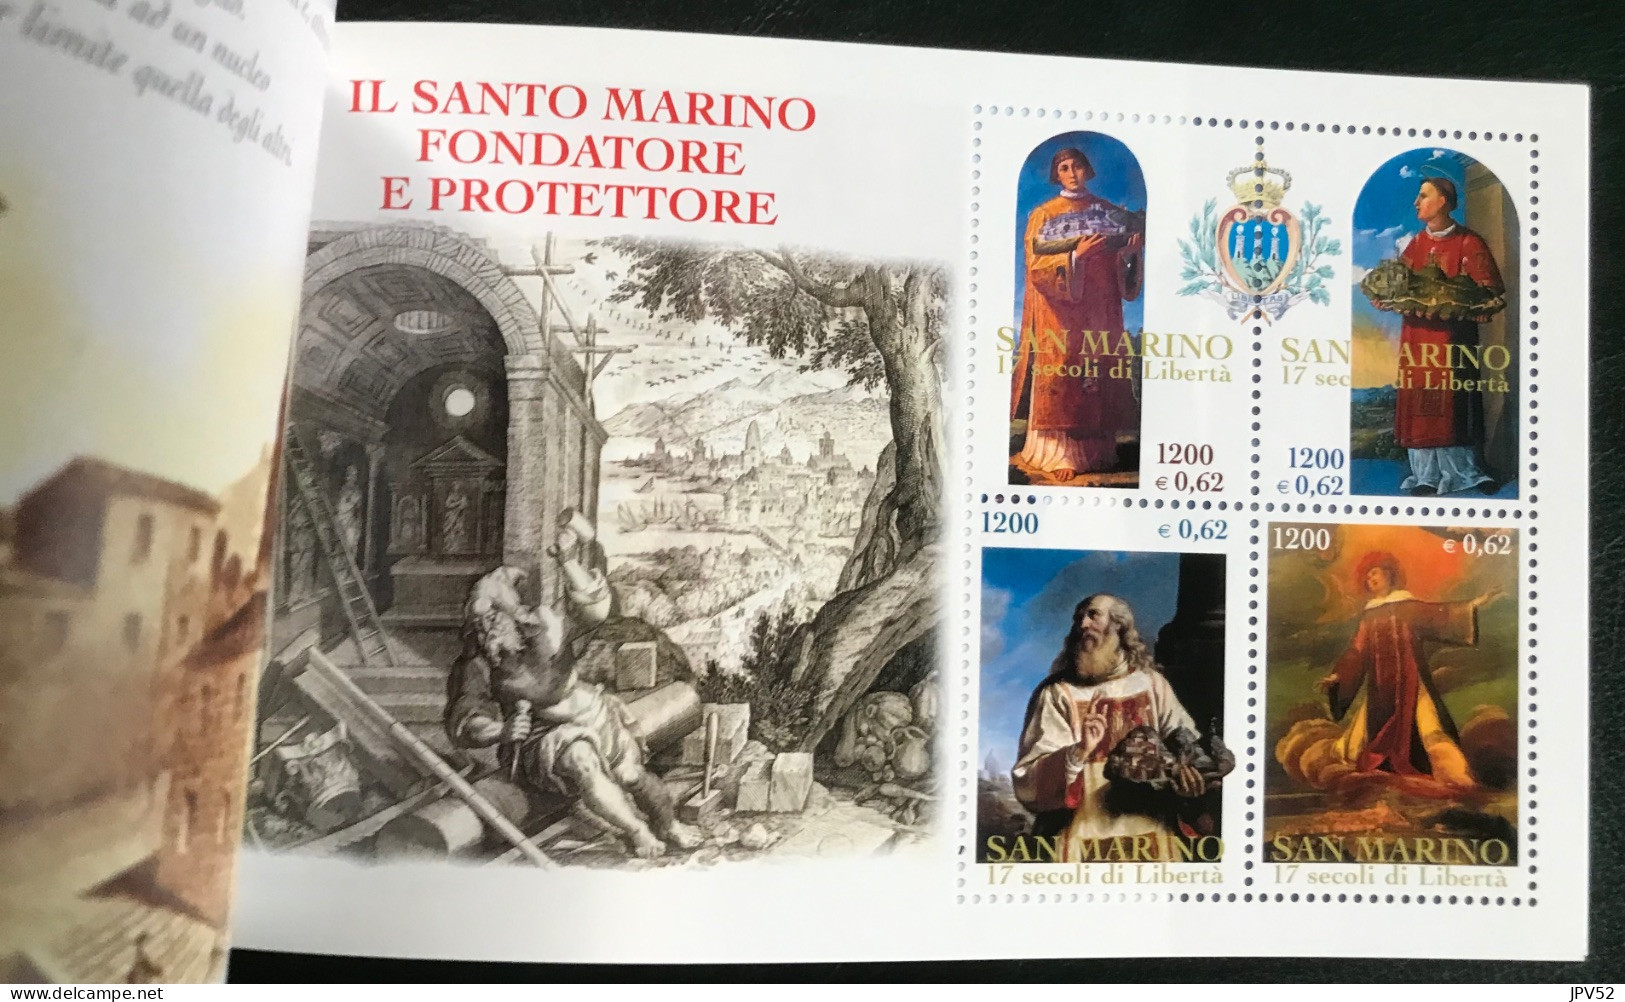 San Marino - VEL1/25 - 2000 - MNH - Michel MH 6 - 1700j Repubblica Di San Marino - Carnets